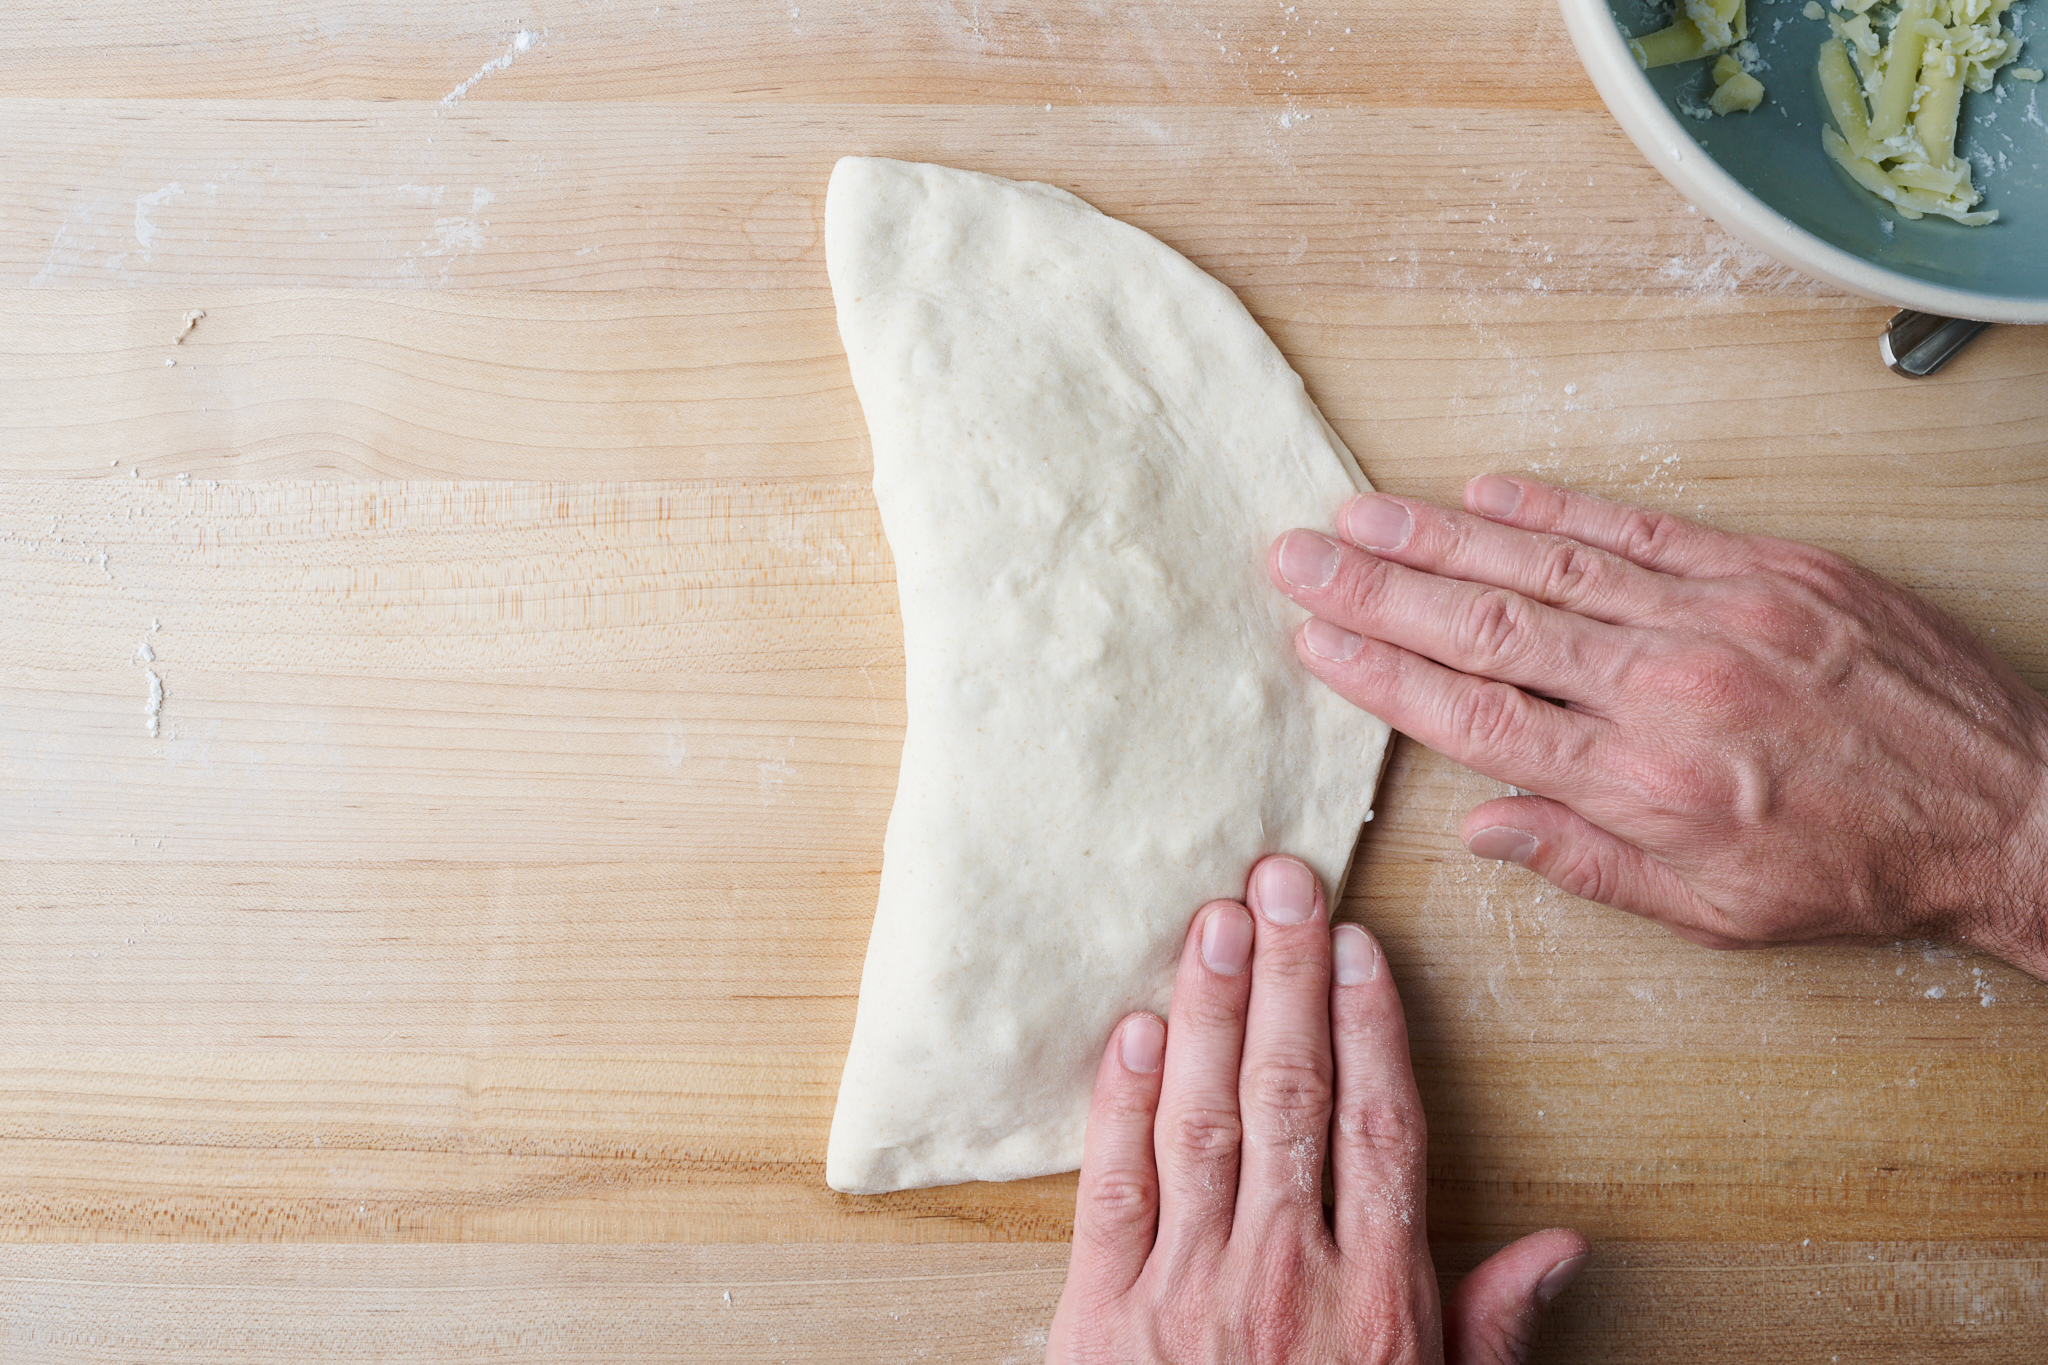 Align calzone dough edges